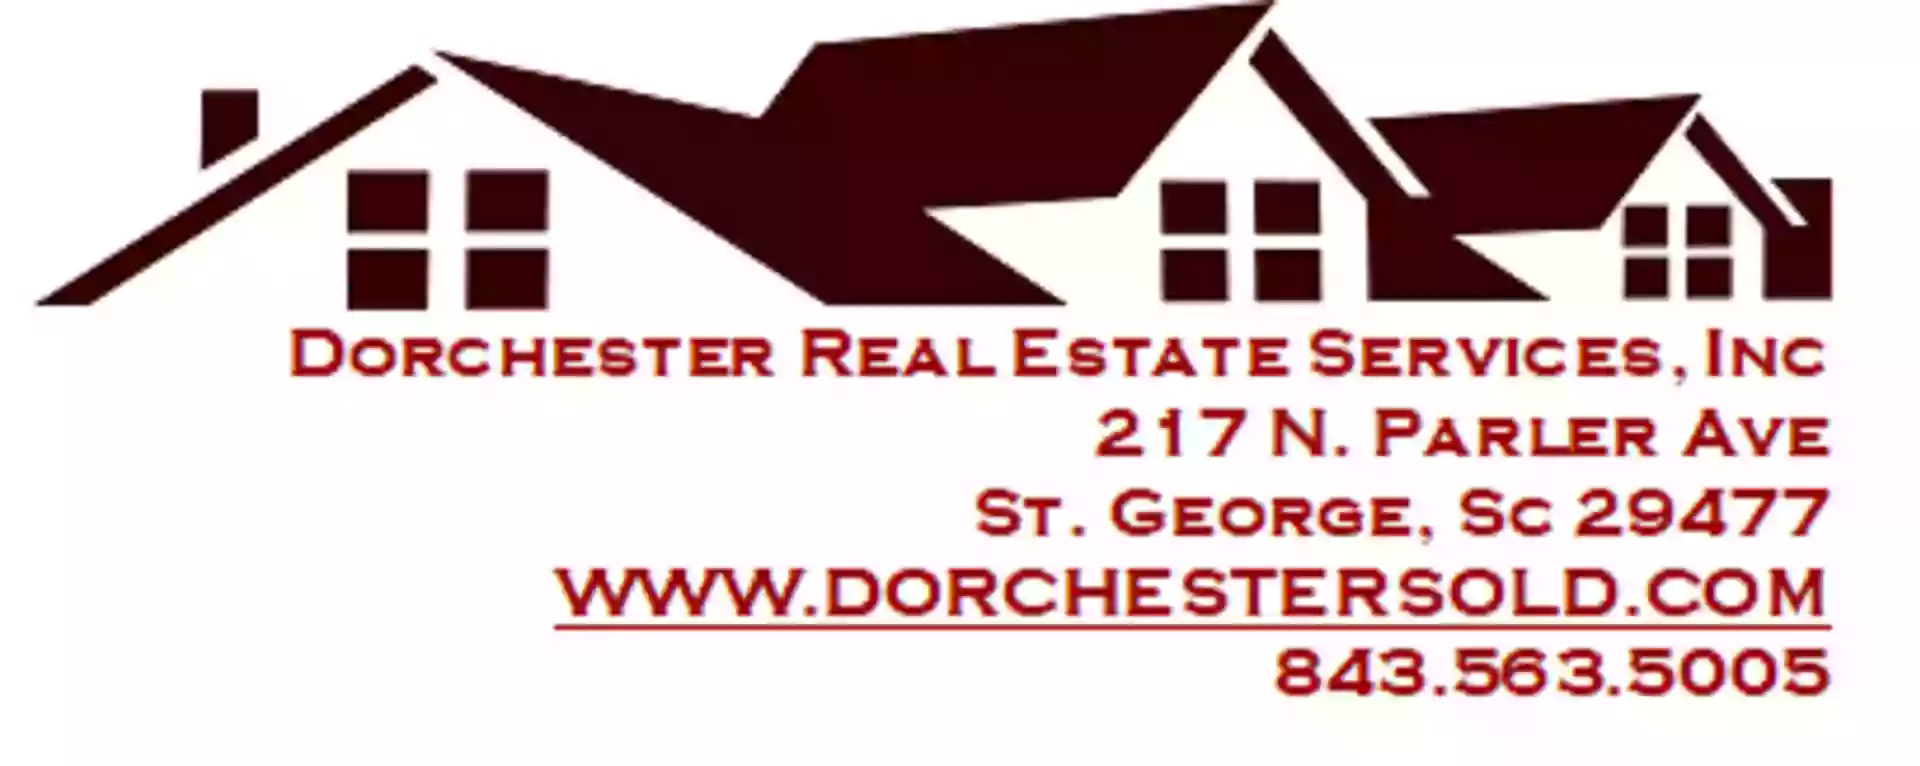 Dorchester Real Estate Services, Inc